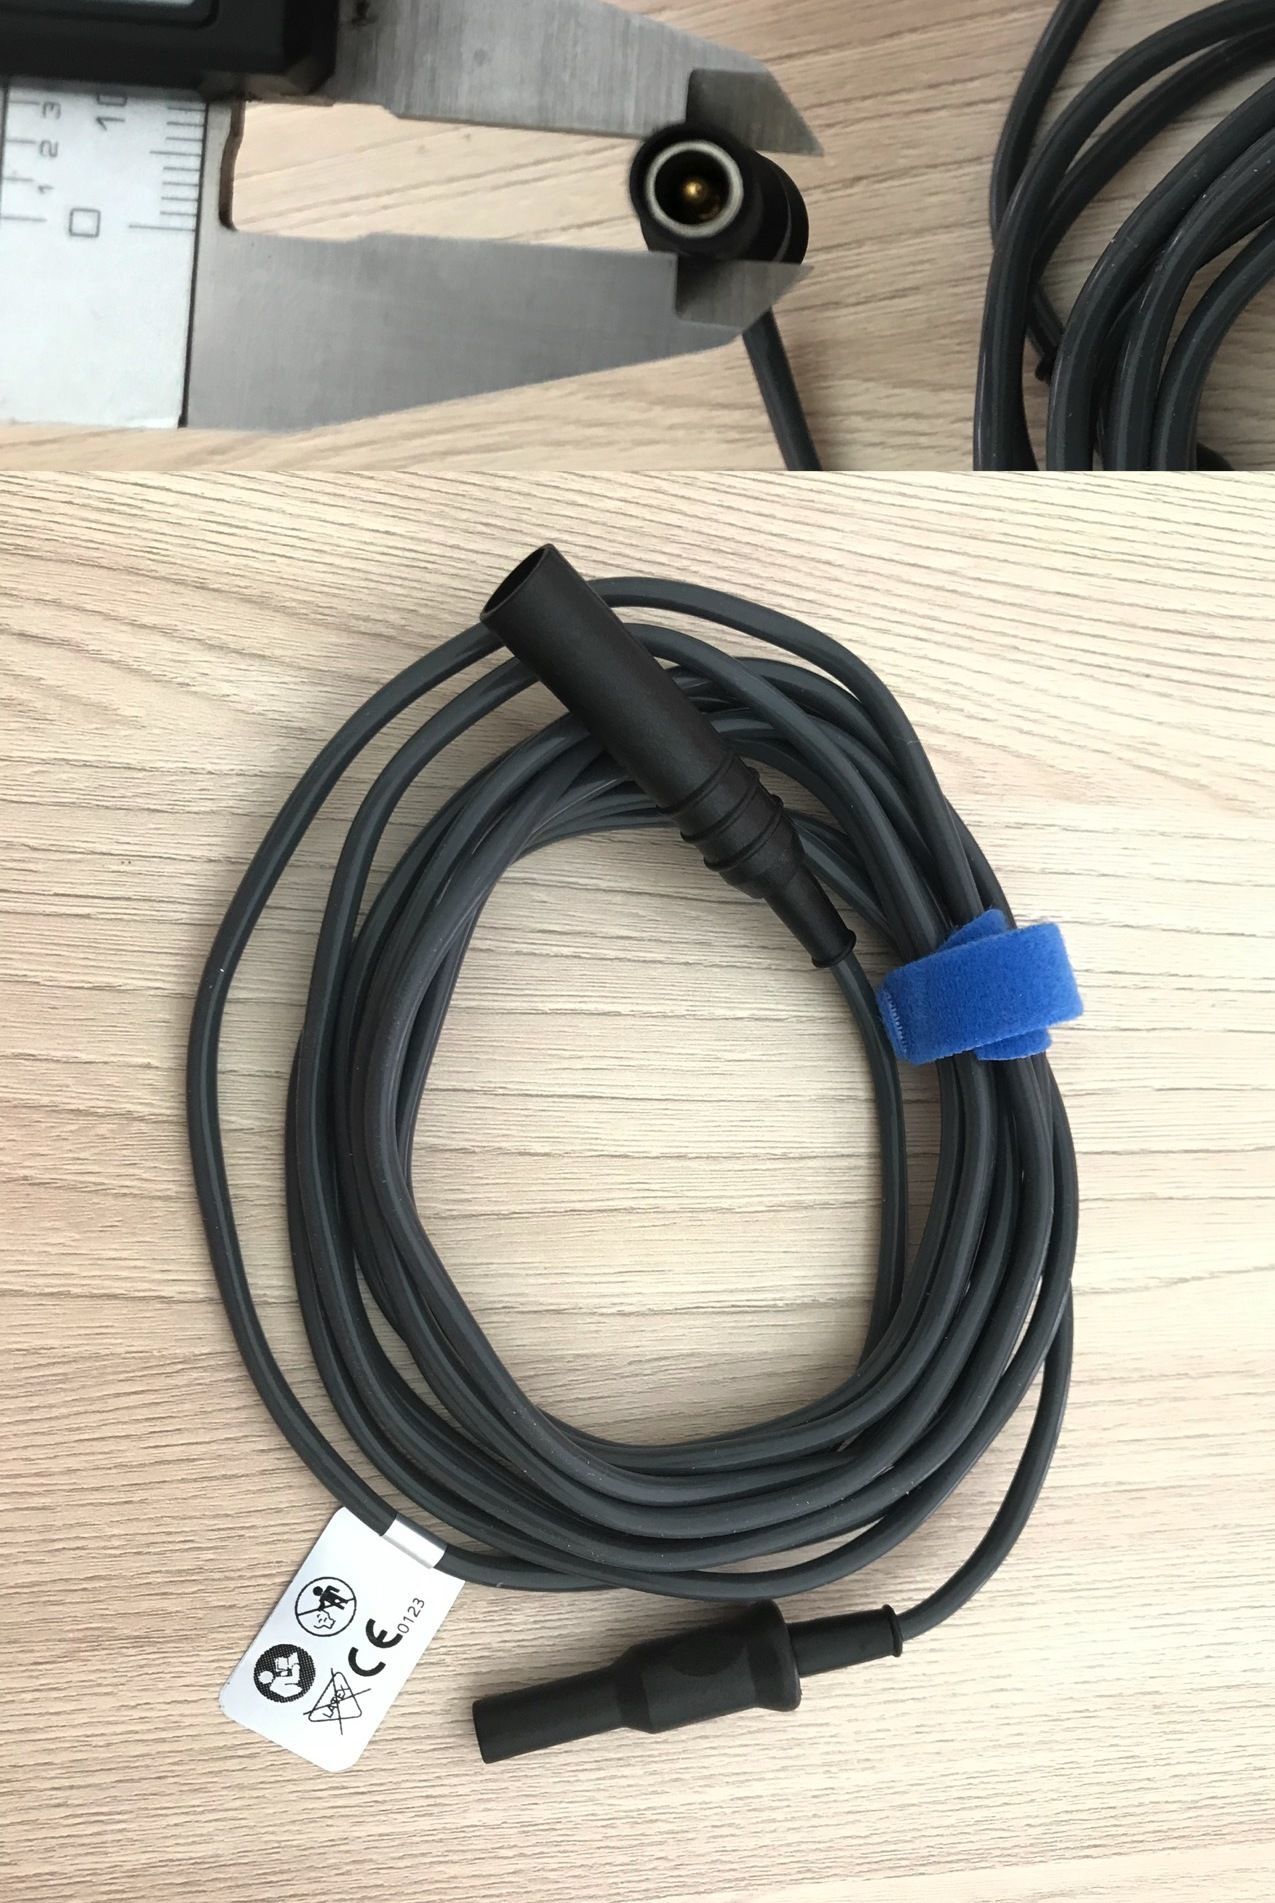 ESU Bipolar forceps cable Euro type with 2 mm connector_สายด้ามจี้ไบโพล่าร์ สายเคเบิ้ลไบโพล่าร์แบบข้อต่อเสียบด้ามมาตรฐานยุโรป ข้อต่อเข้าเครื่องเข็มด้านในขนาด 2 มม.